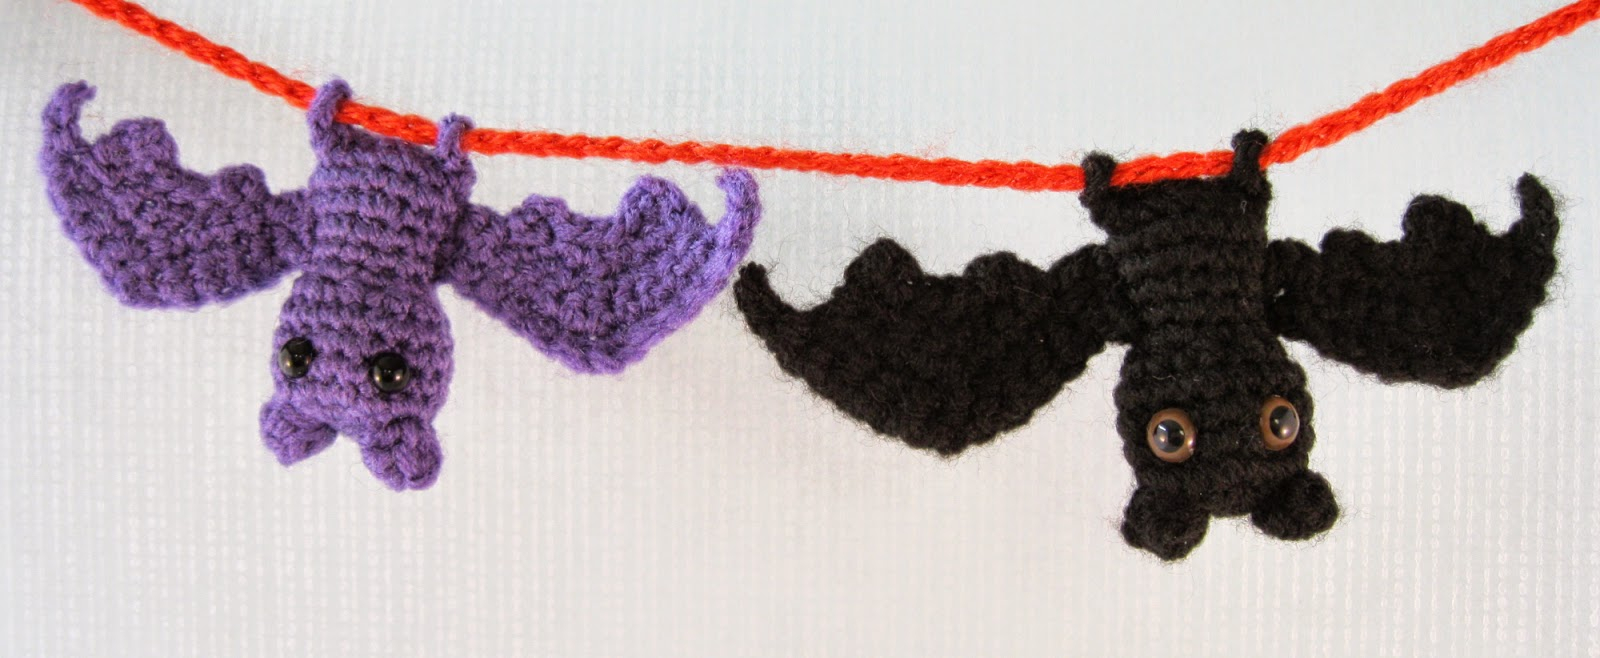 Wing Crochet Pattern Lucyravenscar Crochet Creatures Itty Bitty Bat Free Amigurumi